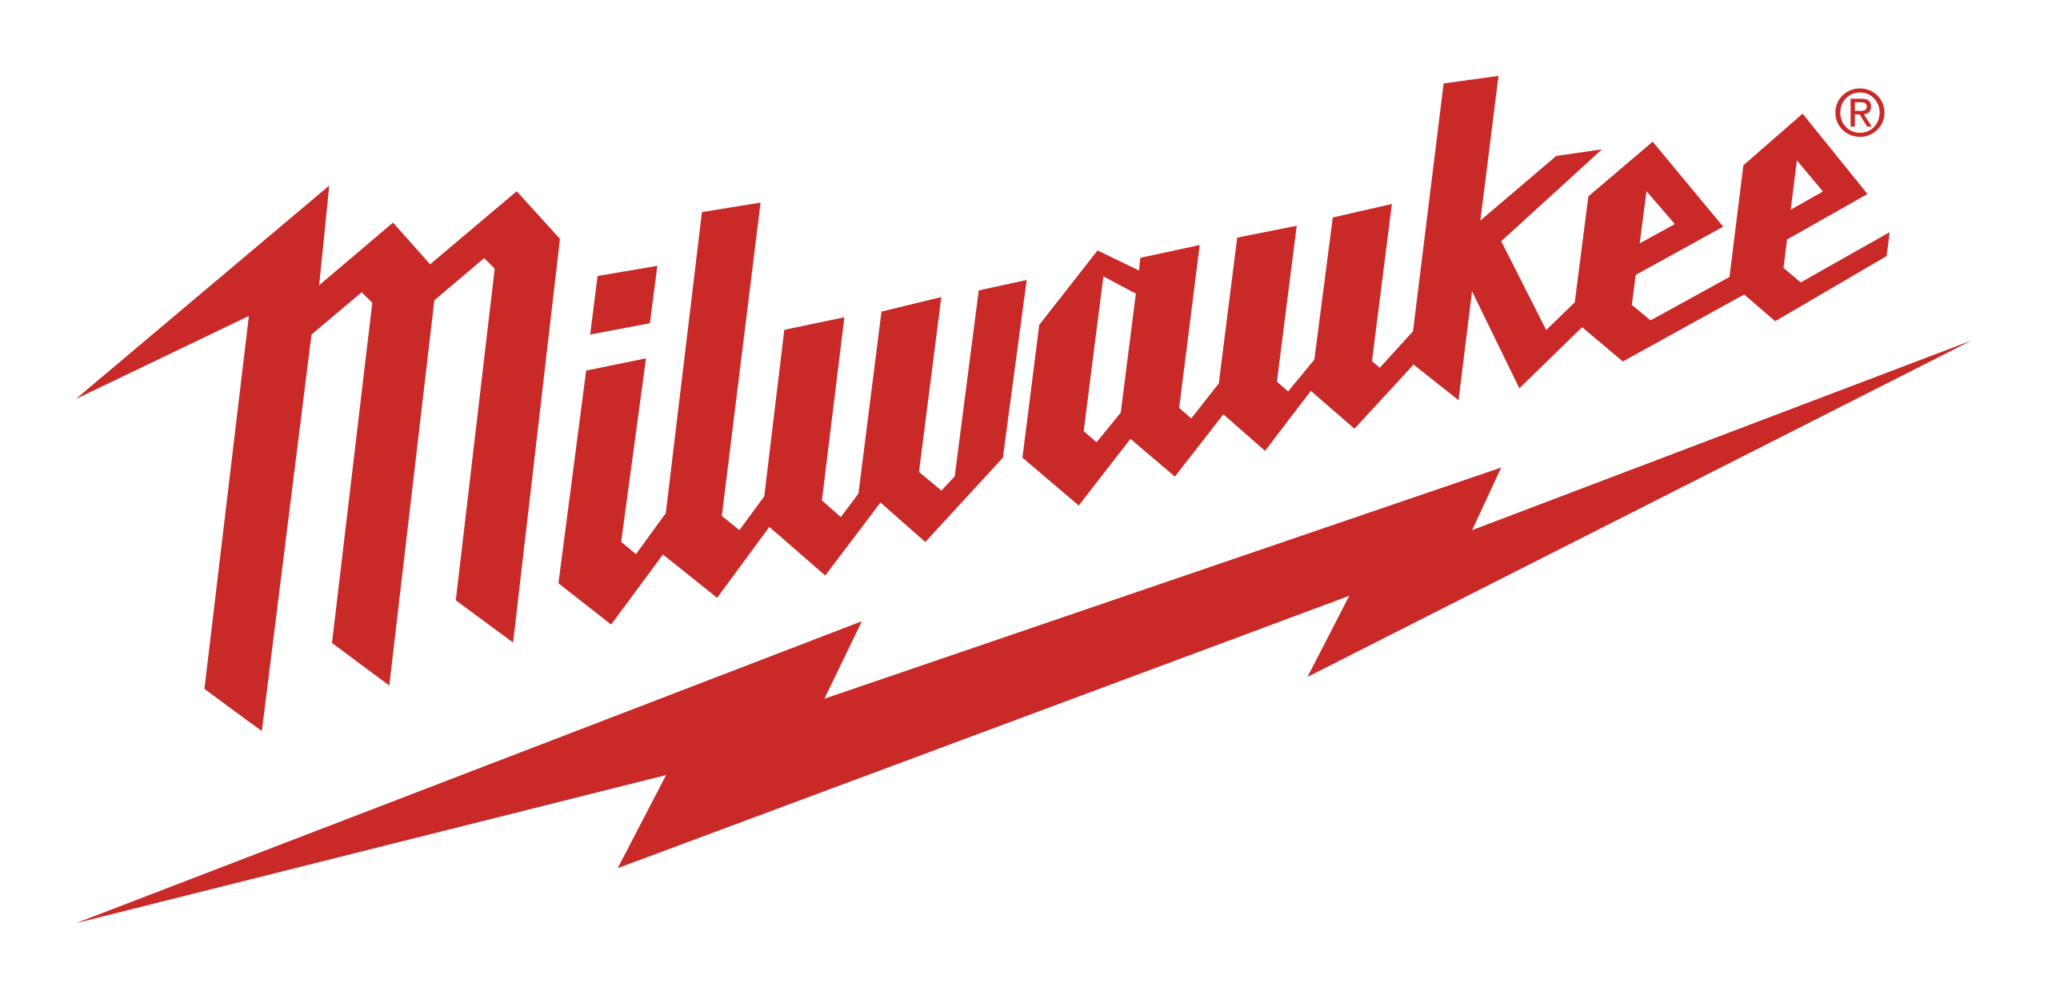 2560px Milwaukee Logo.svg